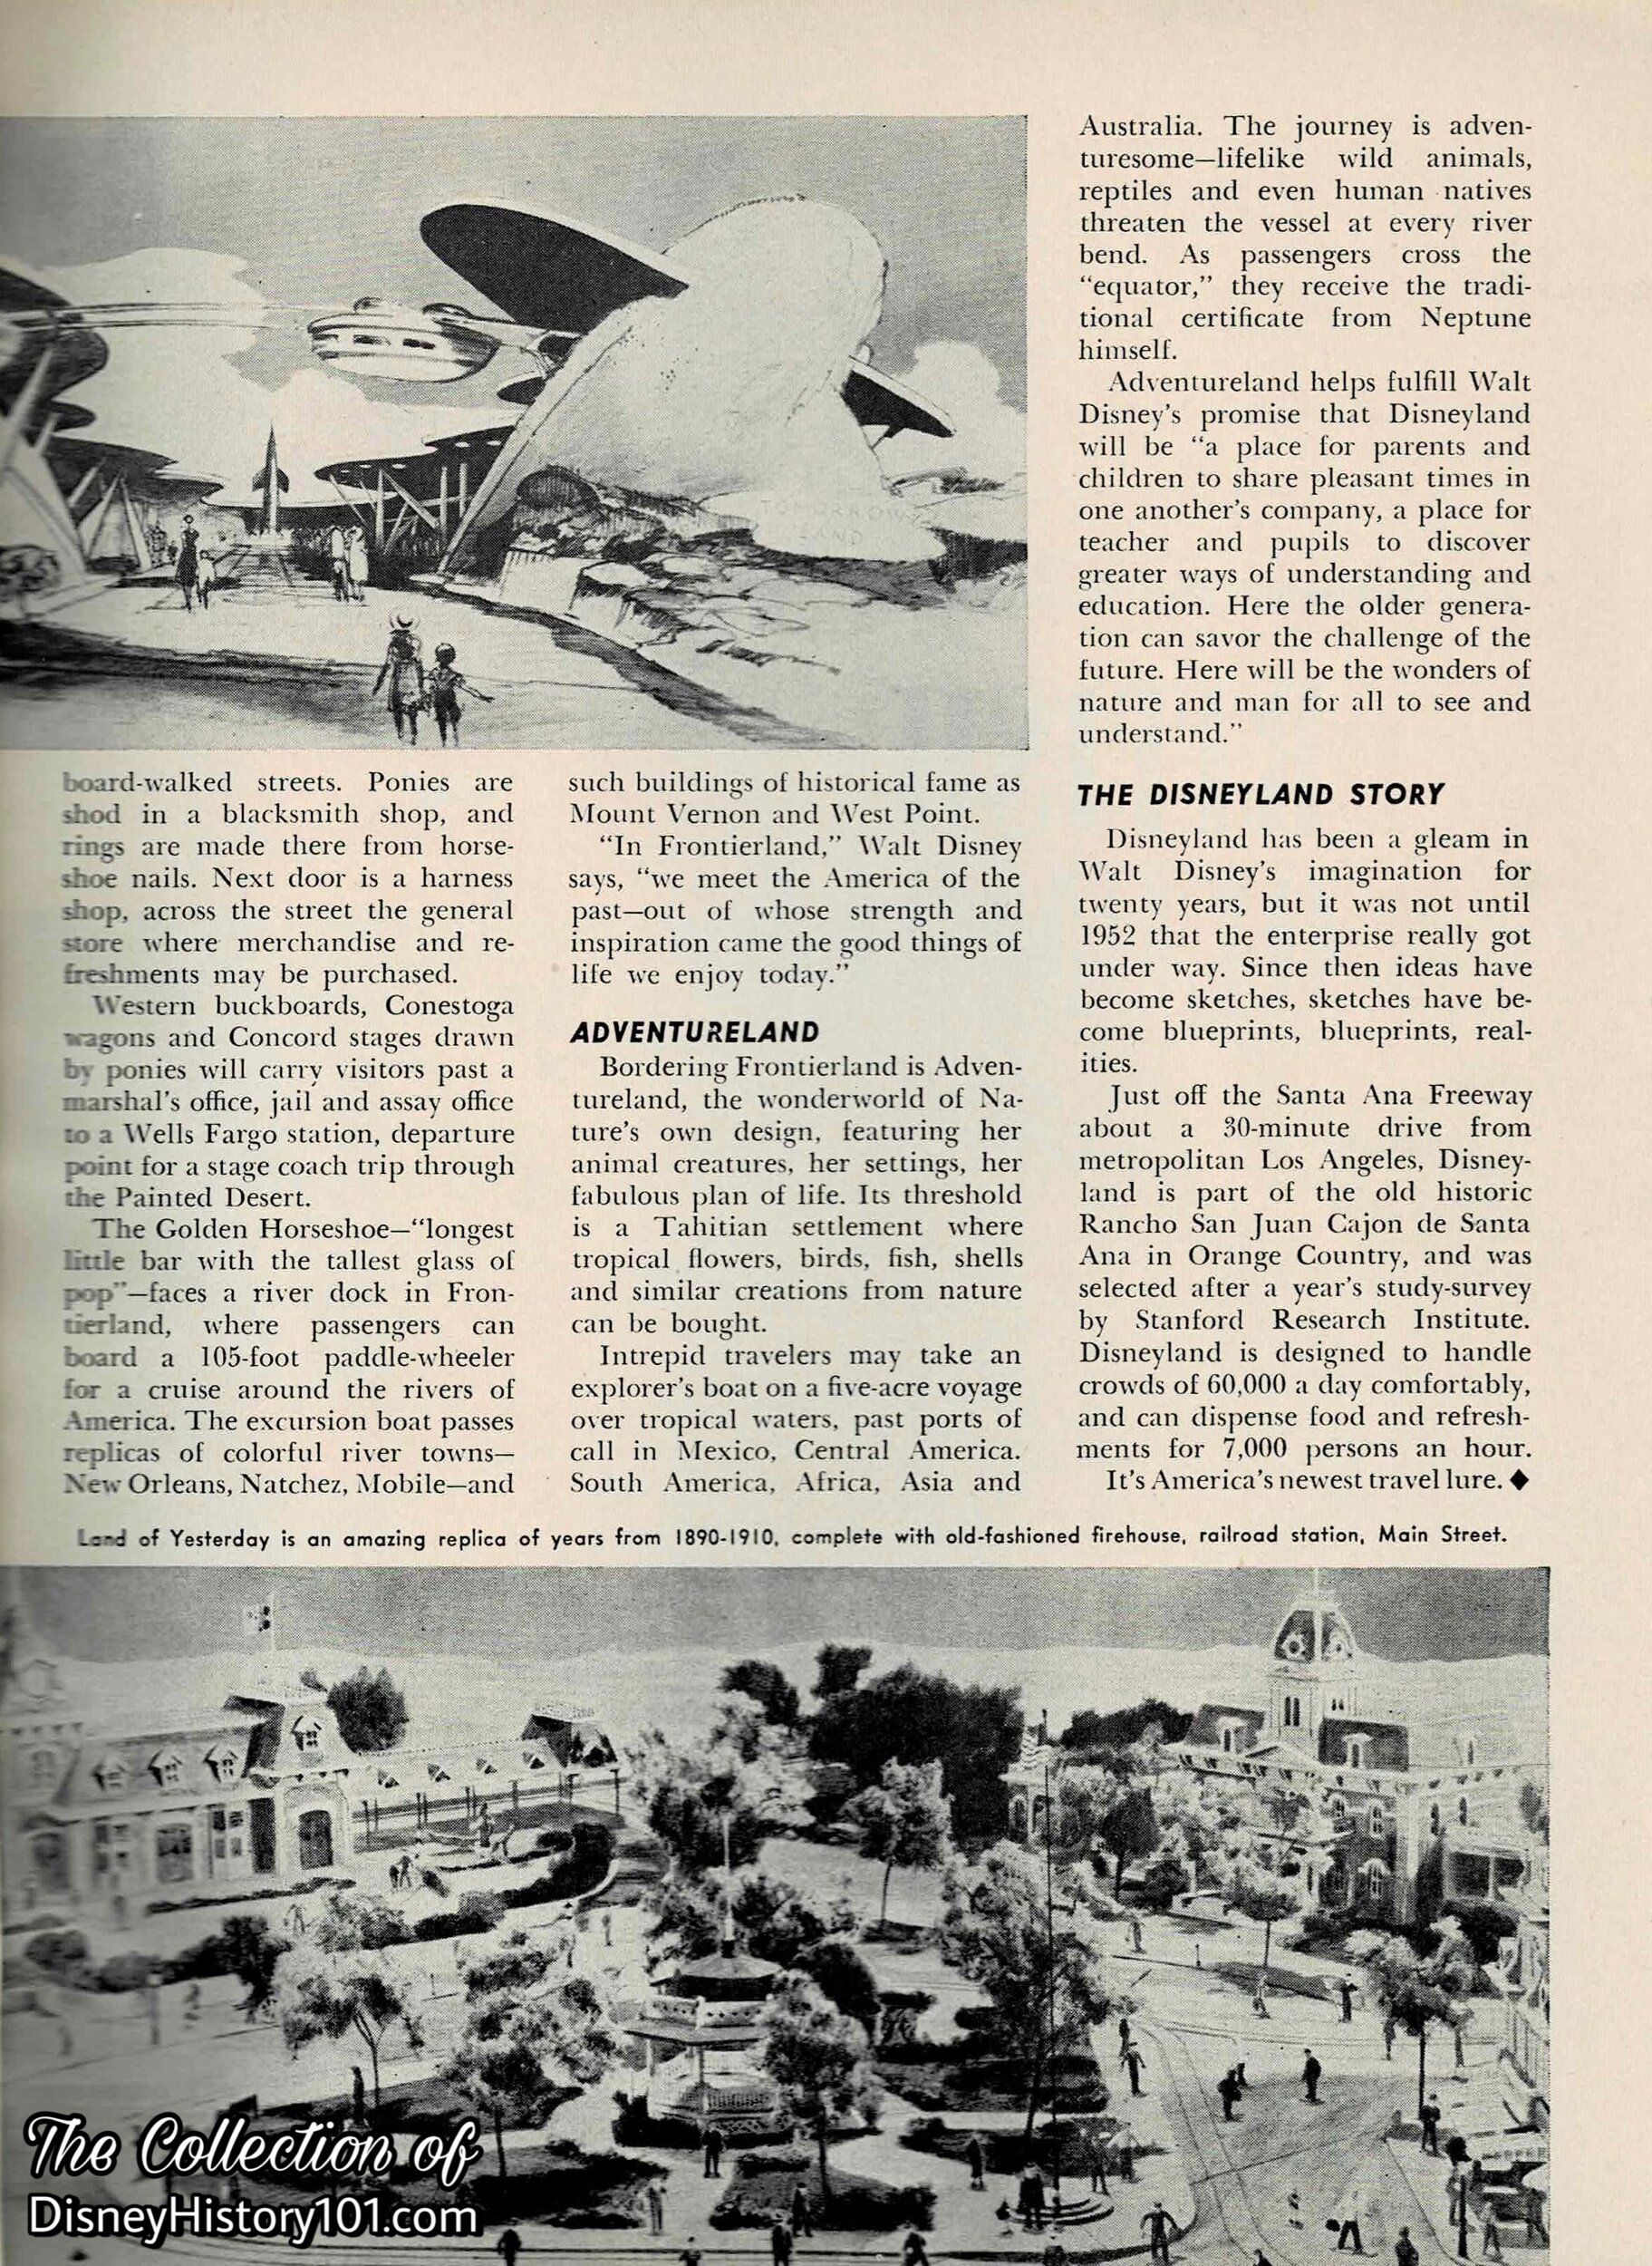 Travel - The Magazine That Roams the Globe, July 1955.